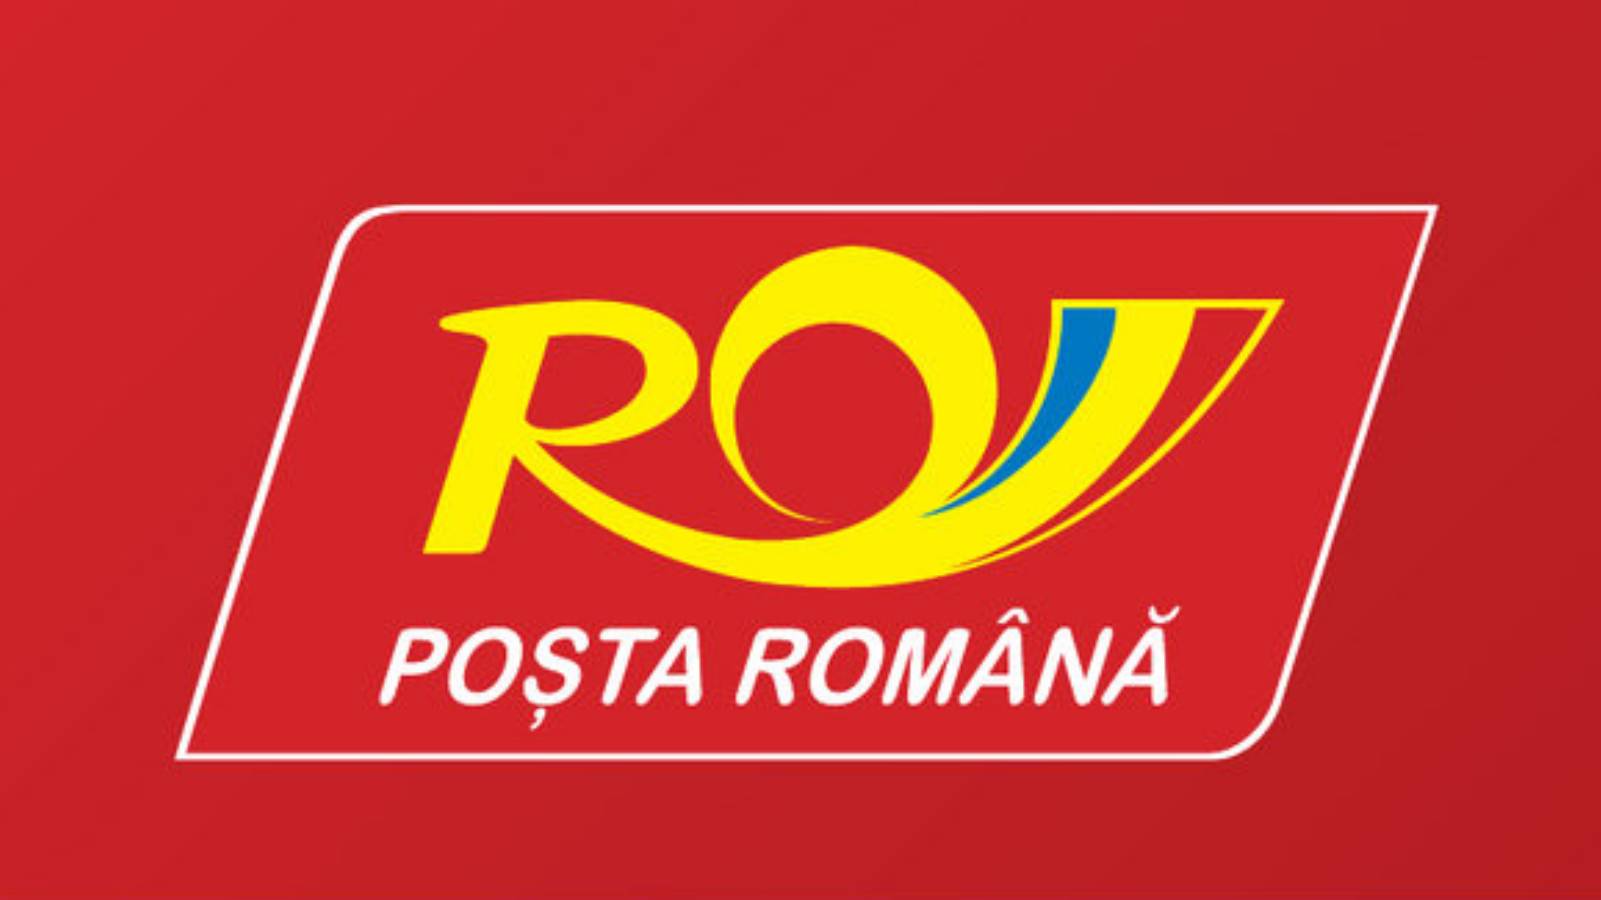 Carte postale de la poste roumaine